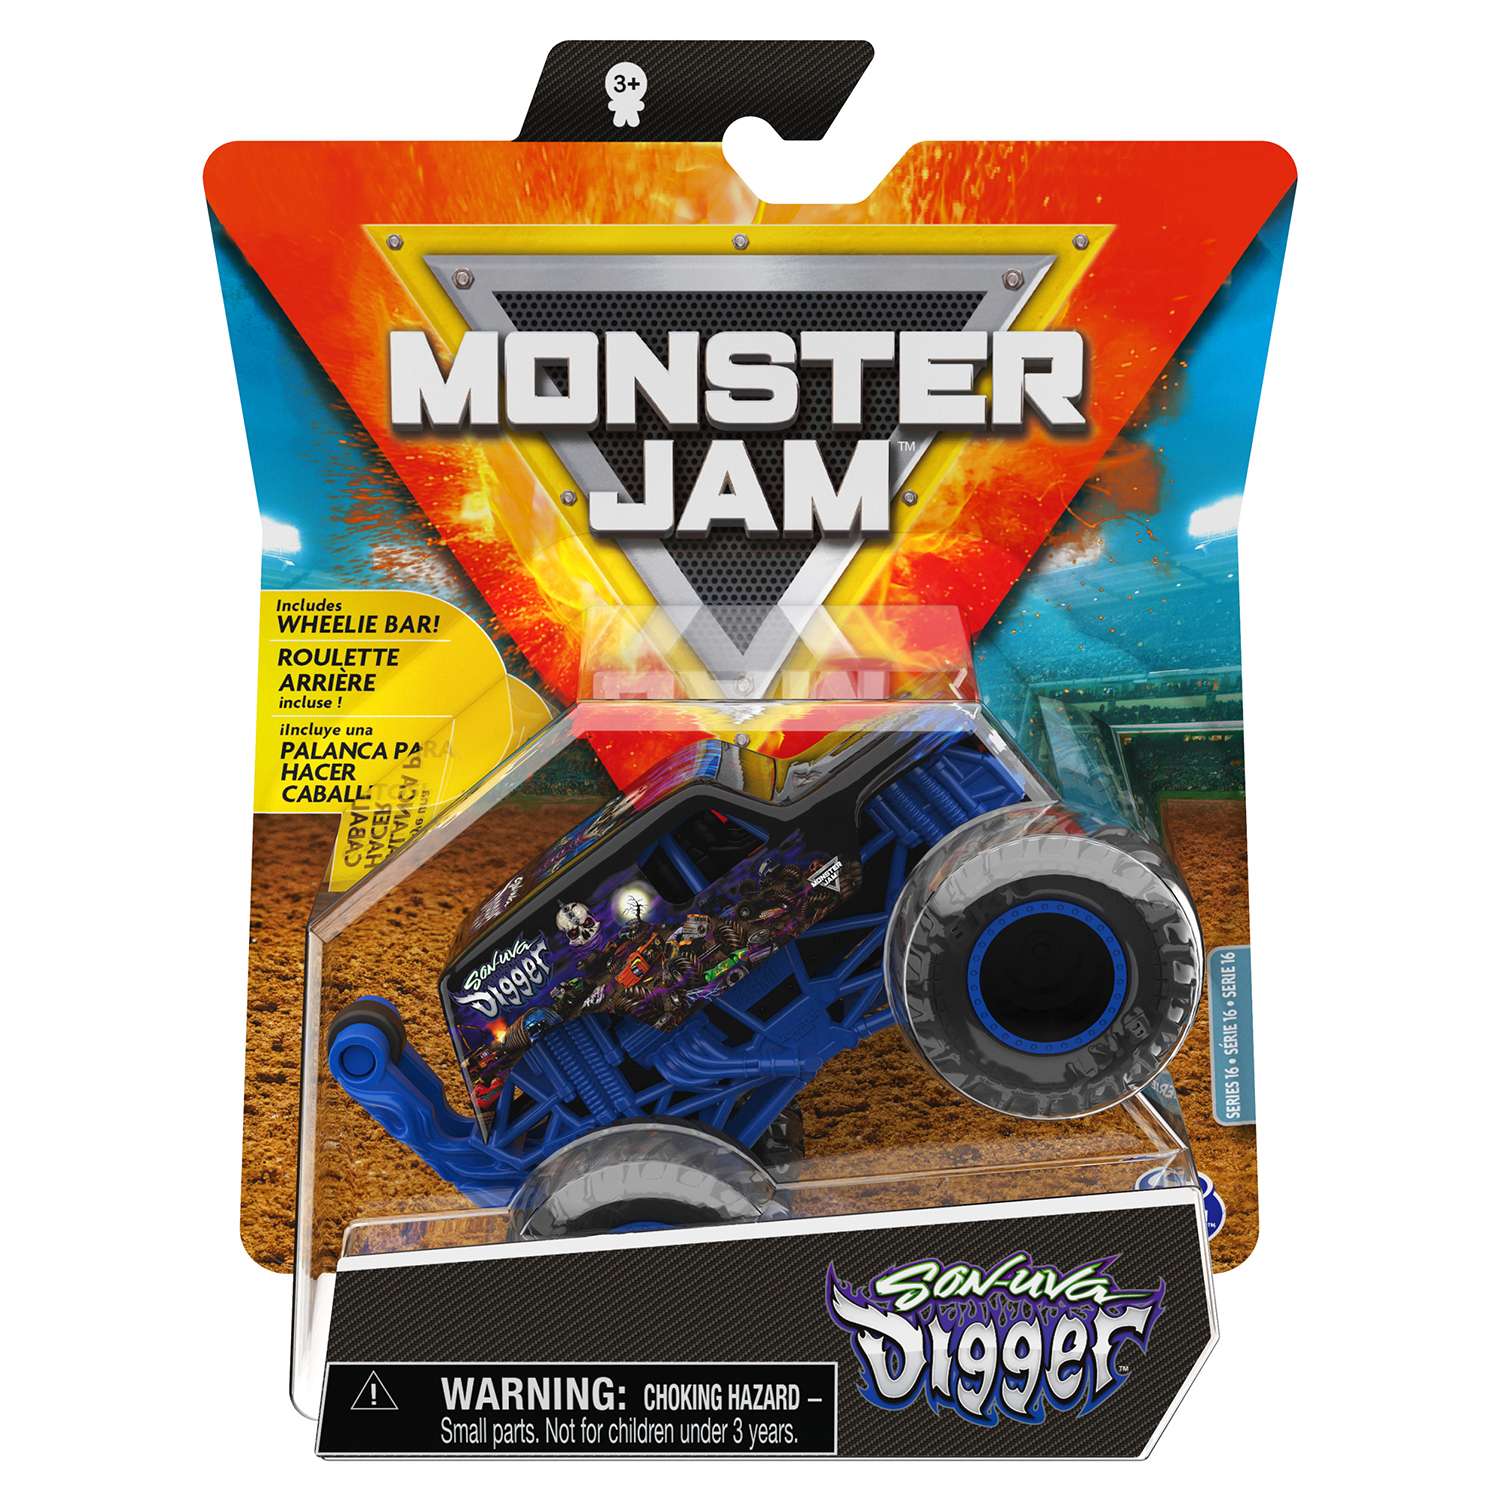 Машинка Monster Jam 1:64 Son Uva Digger 6060869 6060869 - фото 2